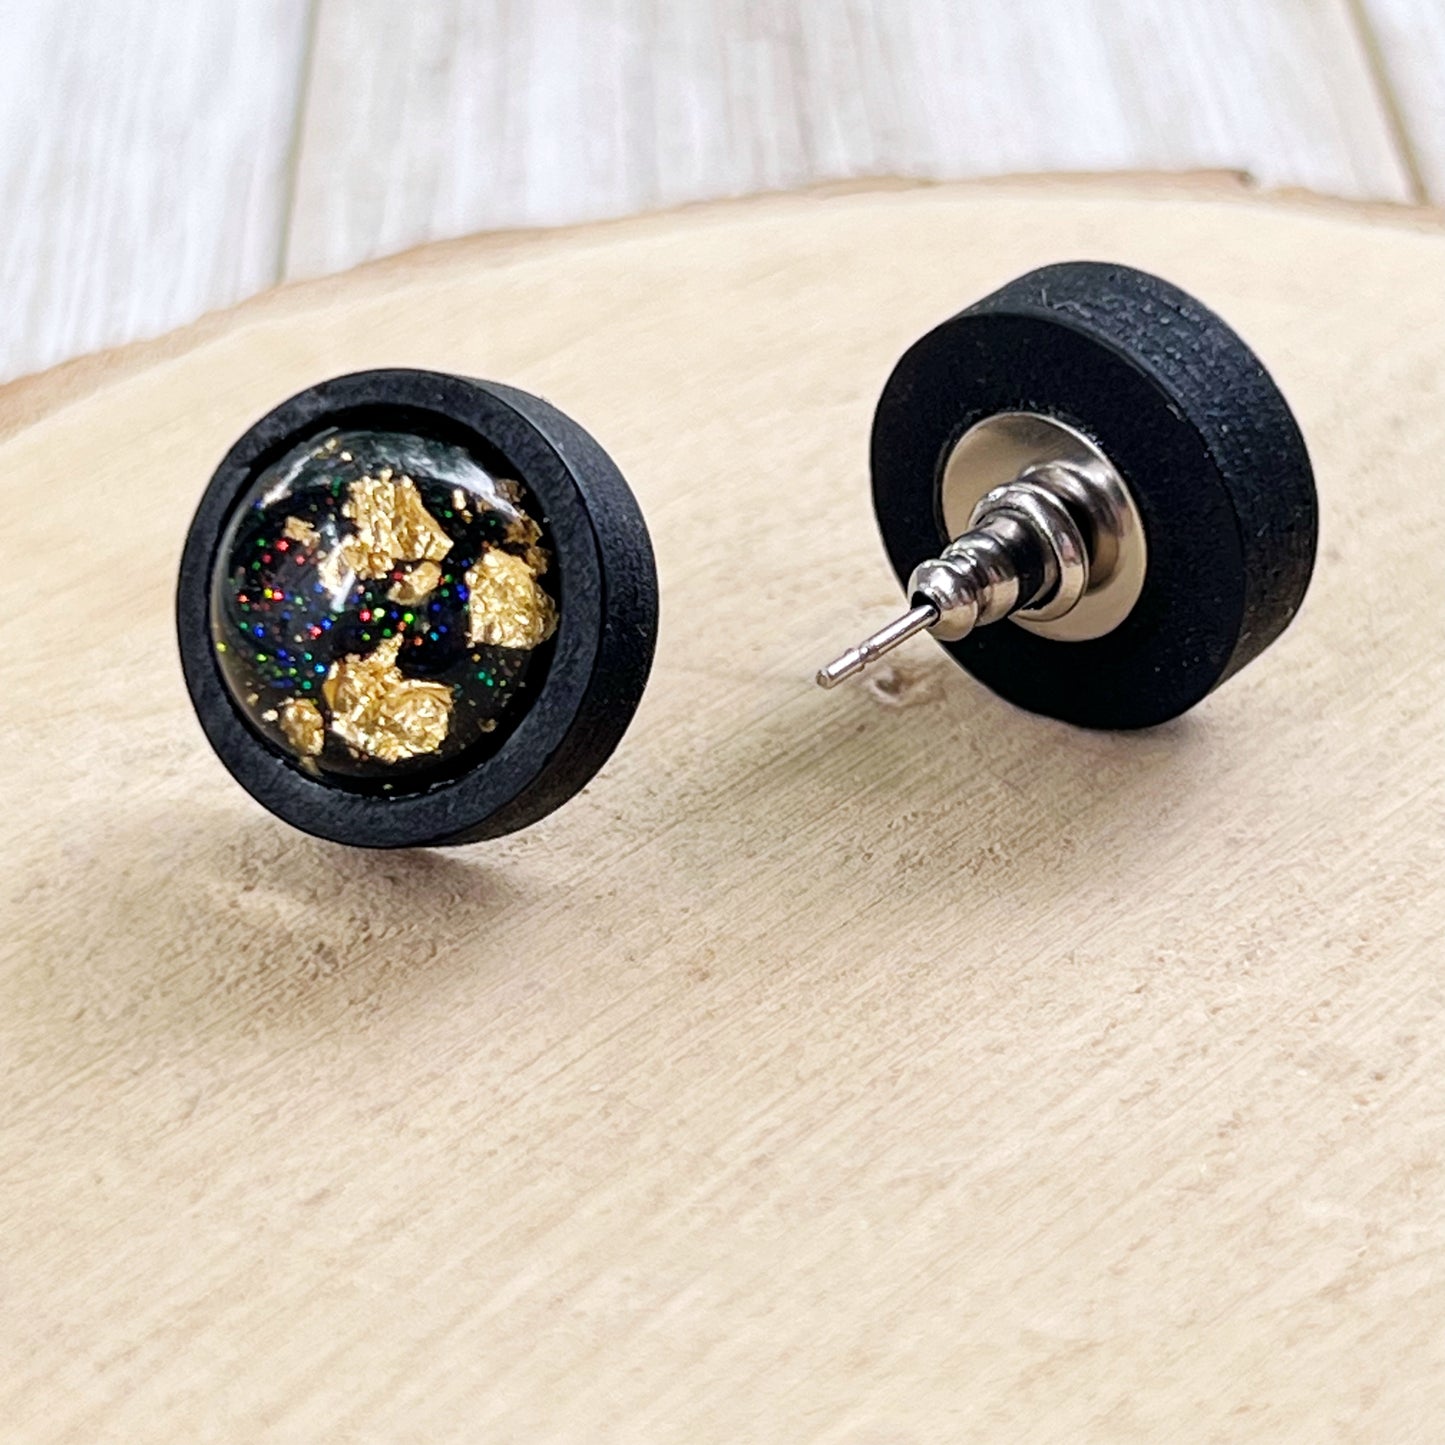 Gold Flake Black Wood Earring Studs - Versatile Unisex Accessories